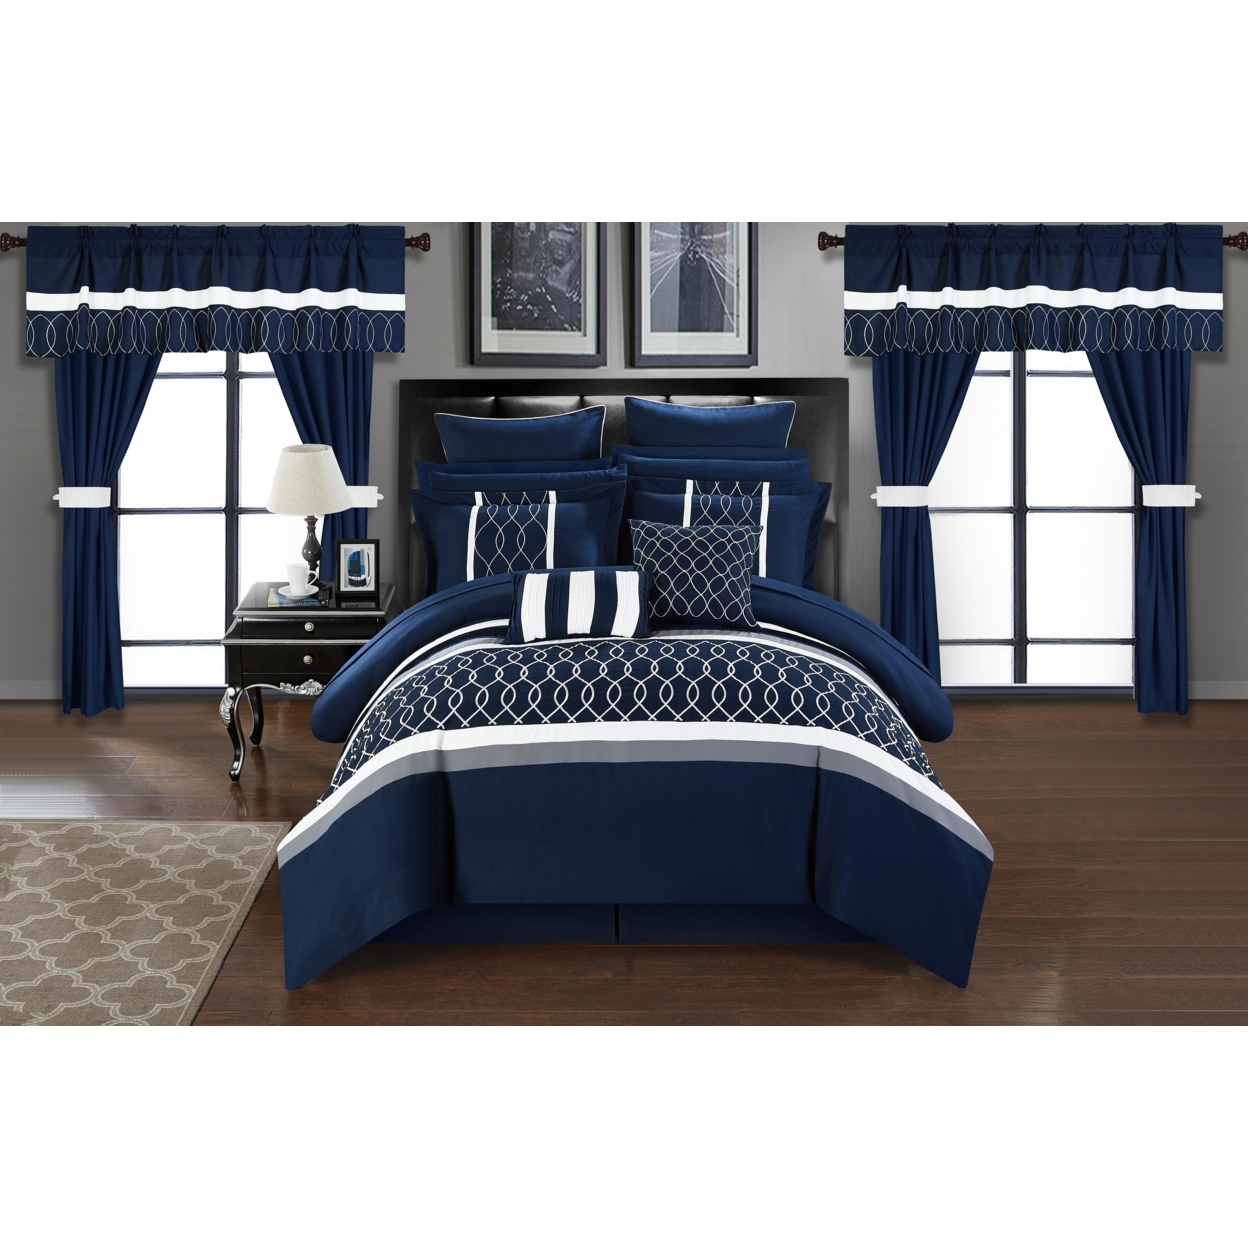 Topaz 24 Piece Comforter Bed In A Bag Pleated Ruffled Designer Embellished Bedding Set - Navy, King